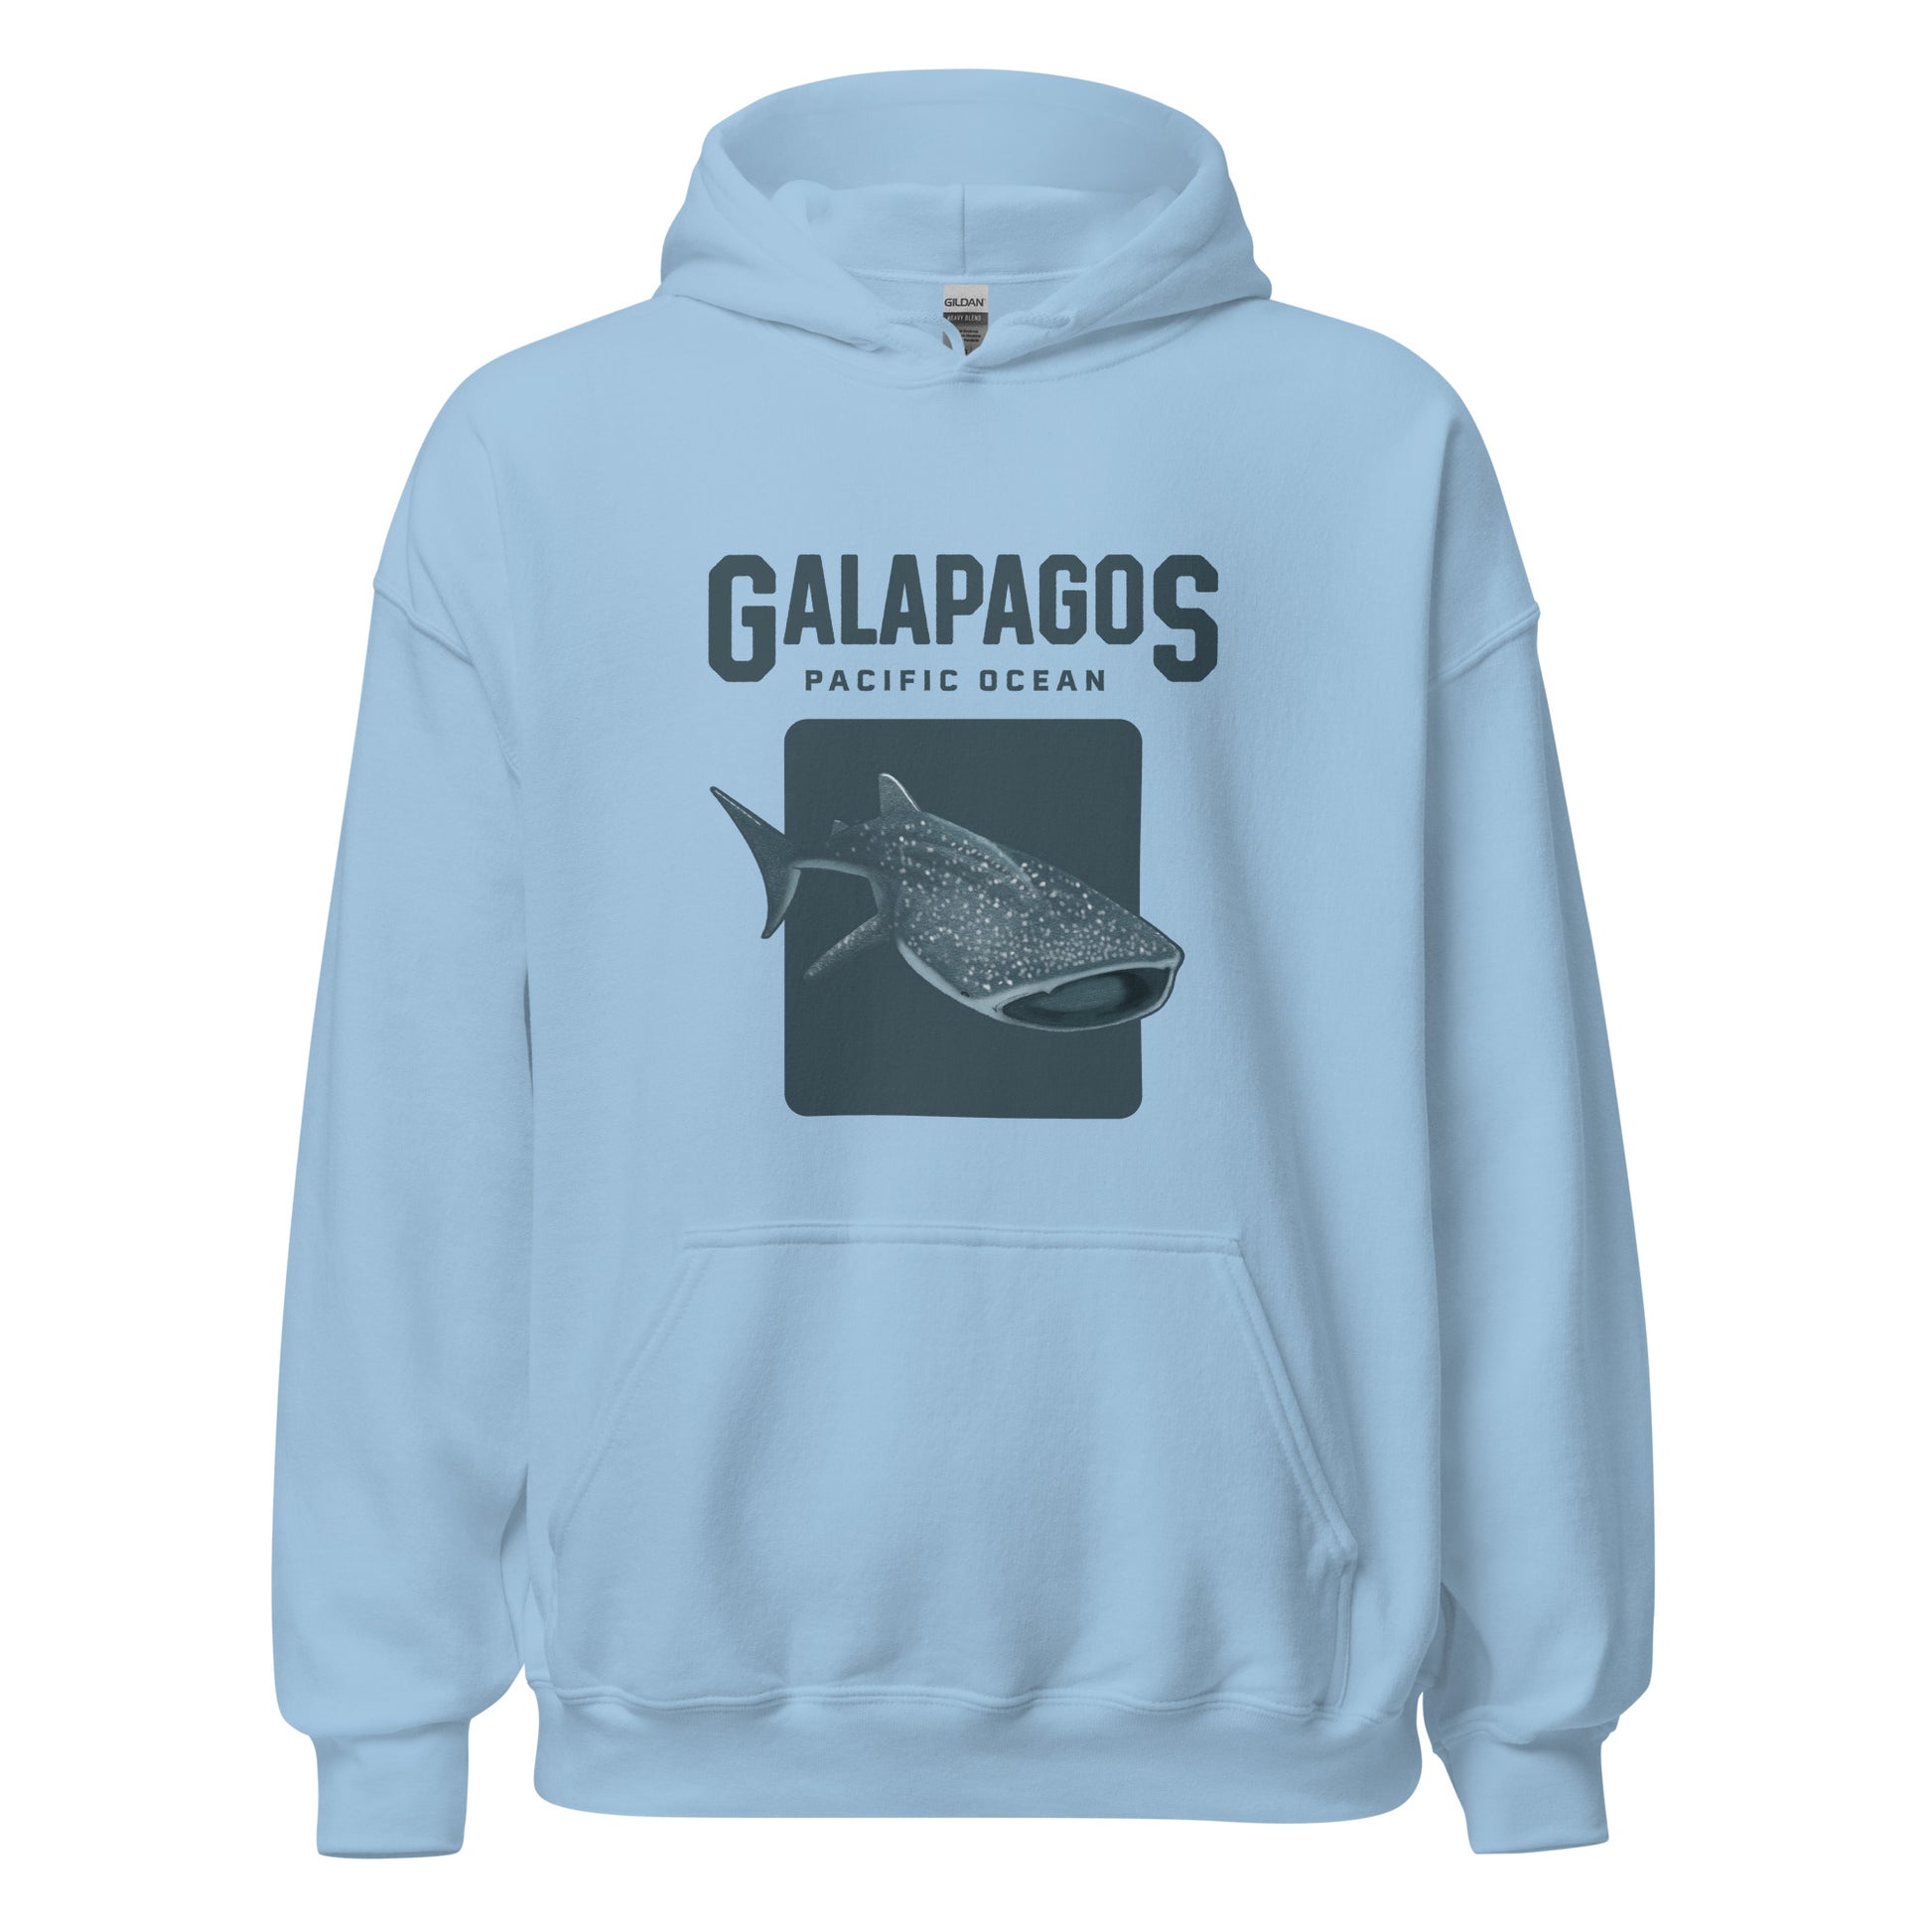 Galapagos whale shark hoodie